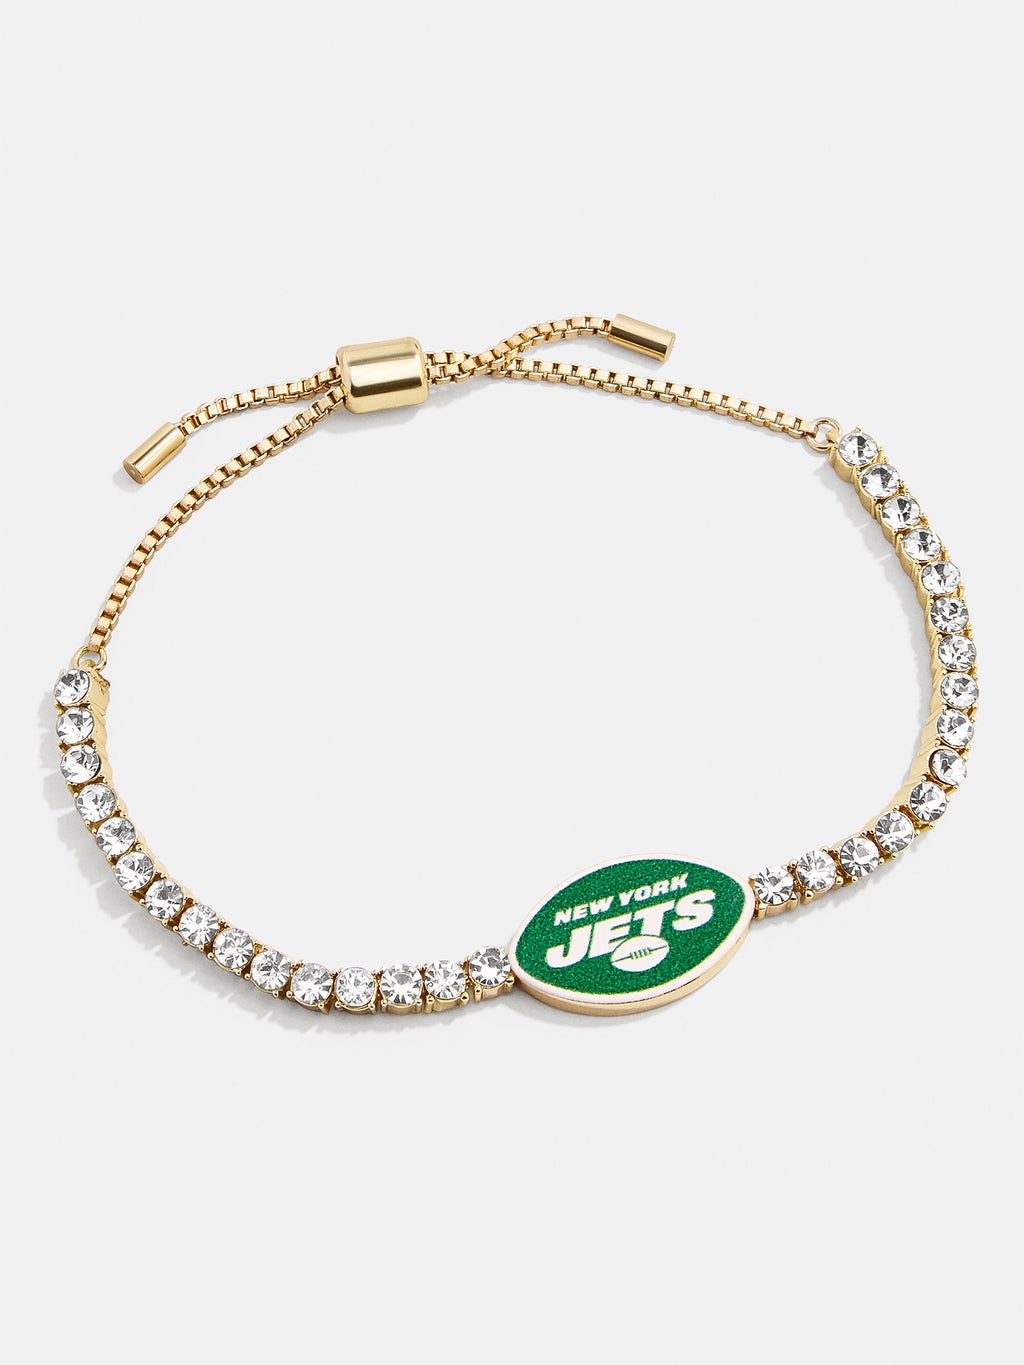 Women's Baublebar Gold New York Jets Pull-Tie Tennis Bracelet